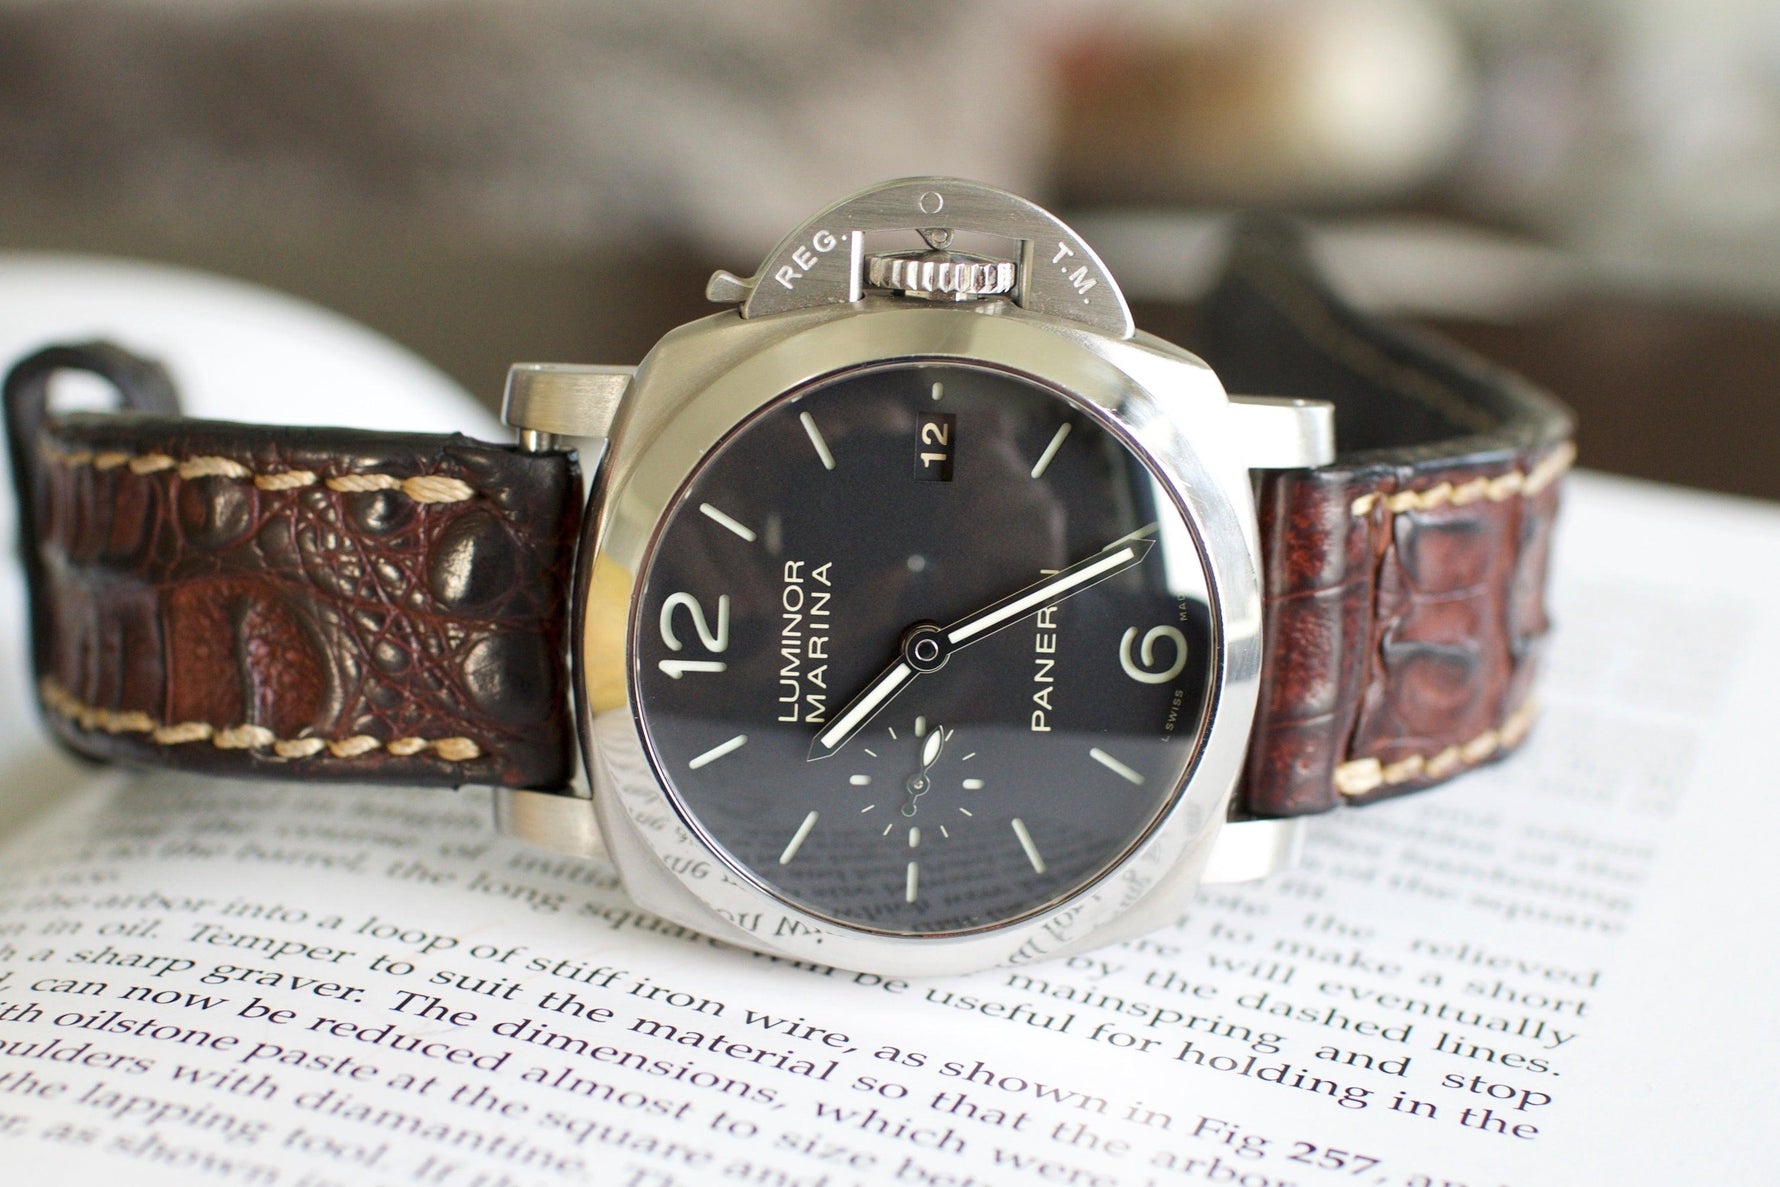 SOLDOUT: Panerai PAM 392 - WearingTime Luxury Watches